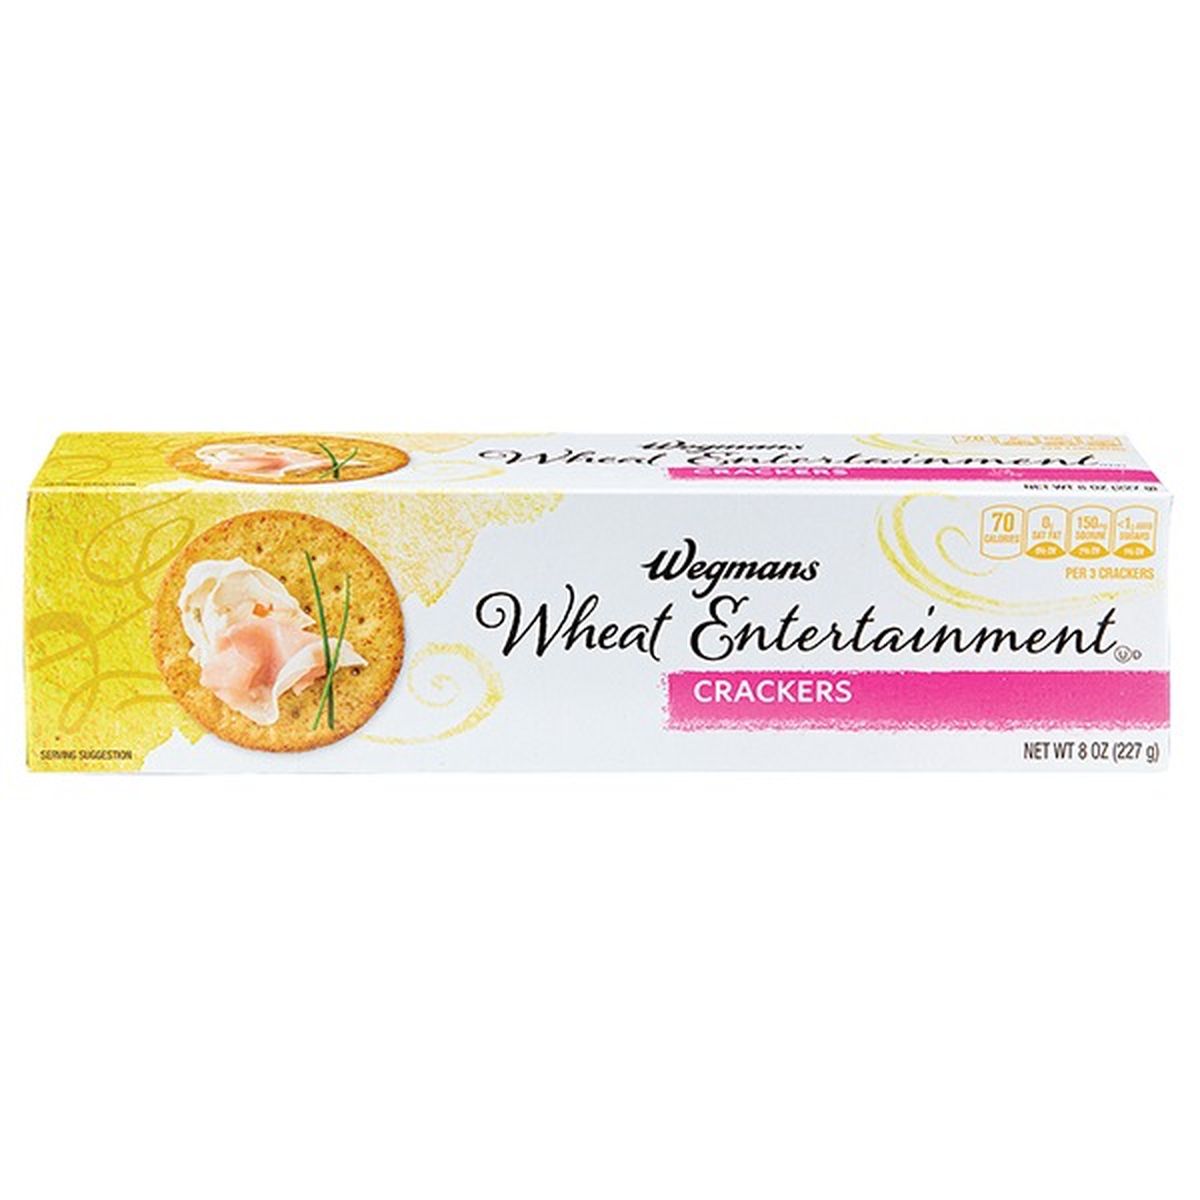 Calories in Wegmans Wheat Entertainment Crackers